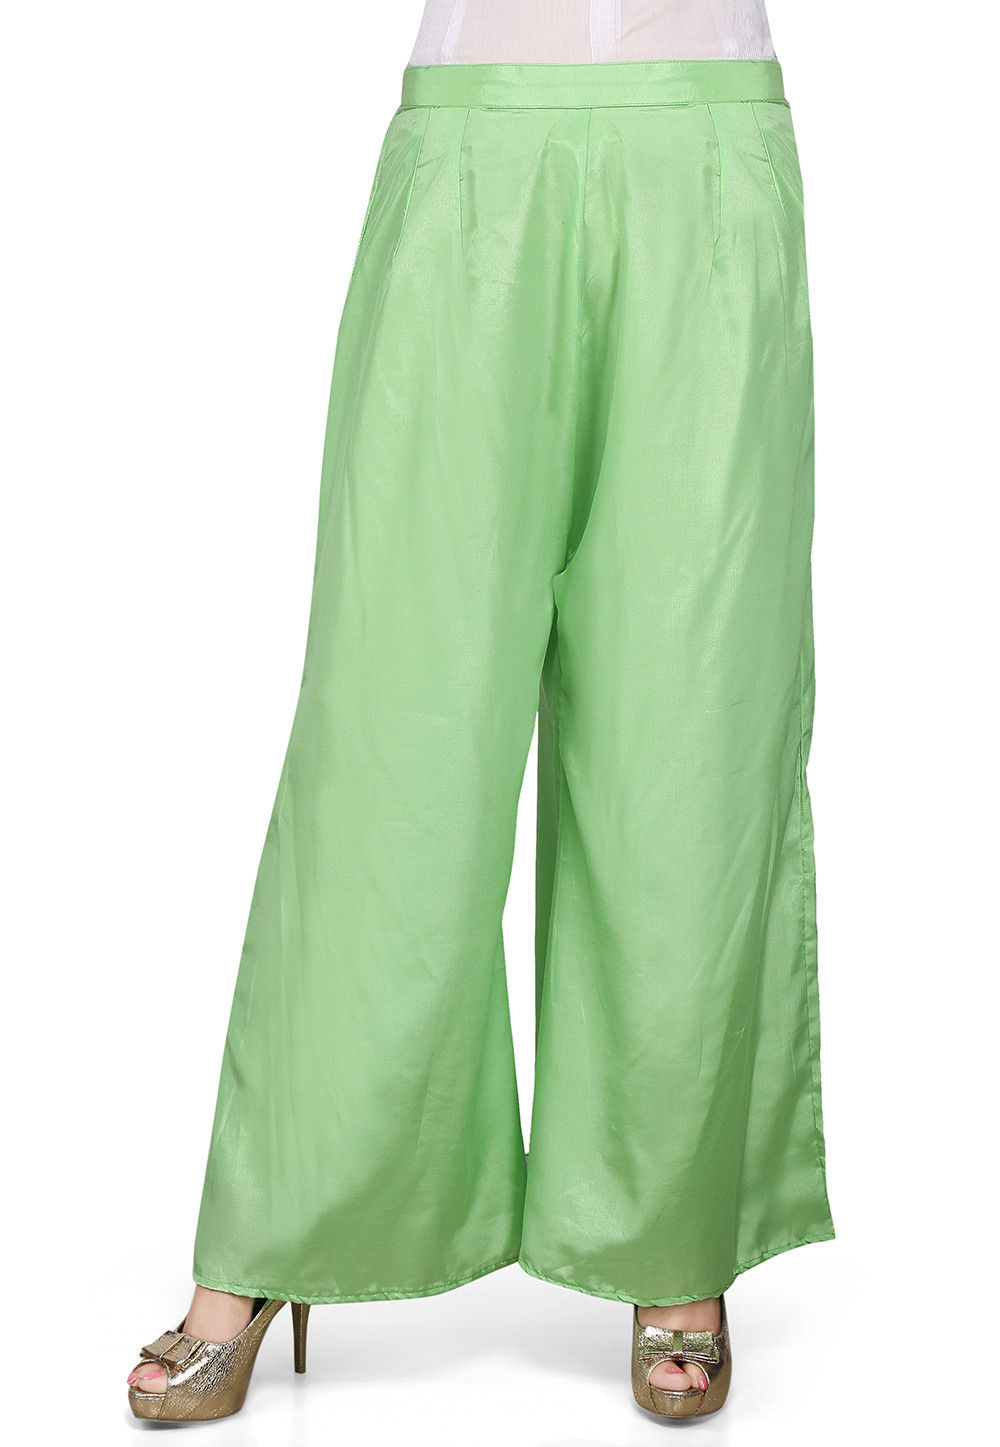 Light Green Pants - High-Waisted Pants - Wide-Leg Pants - Lulus